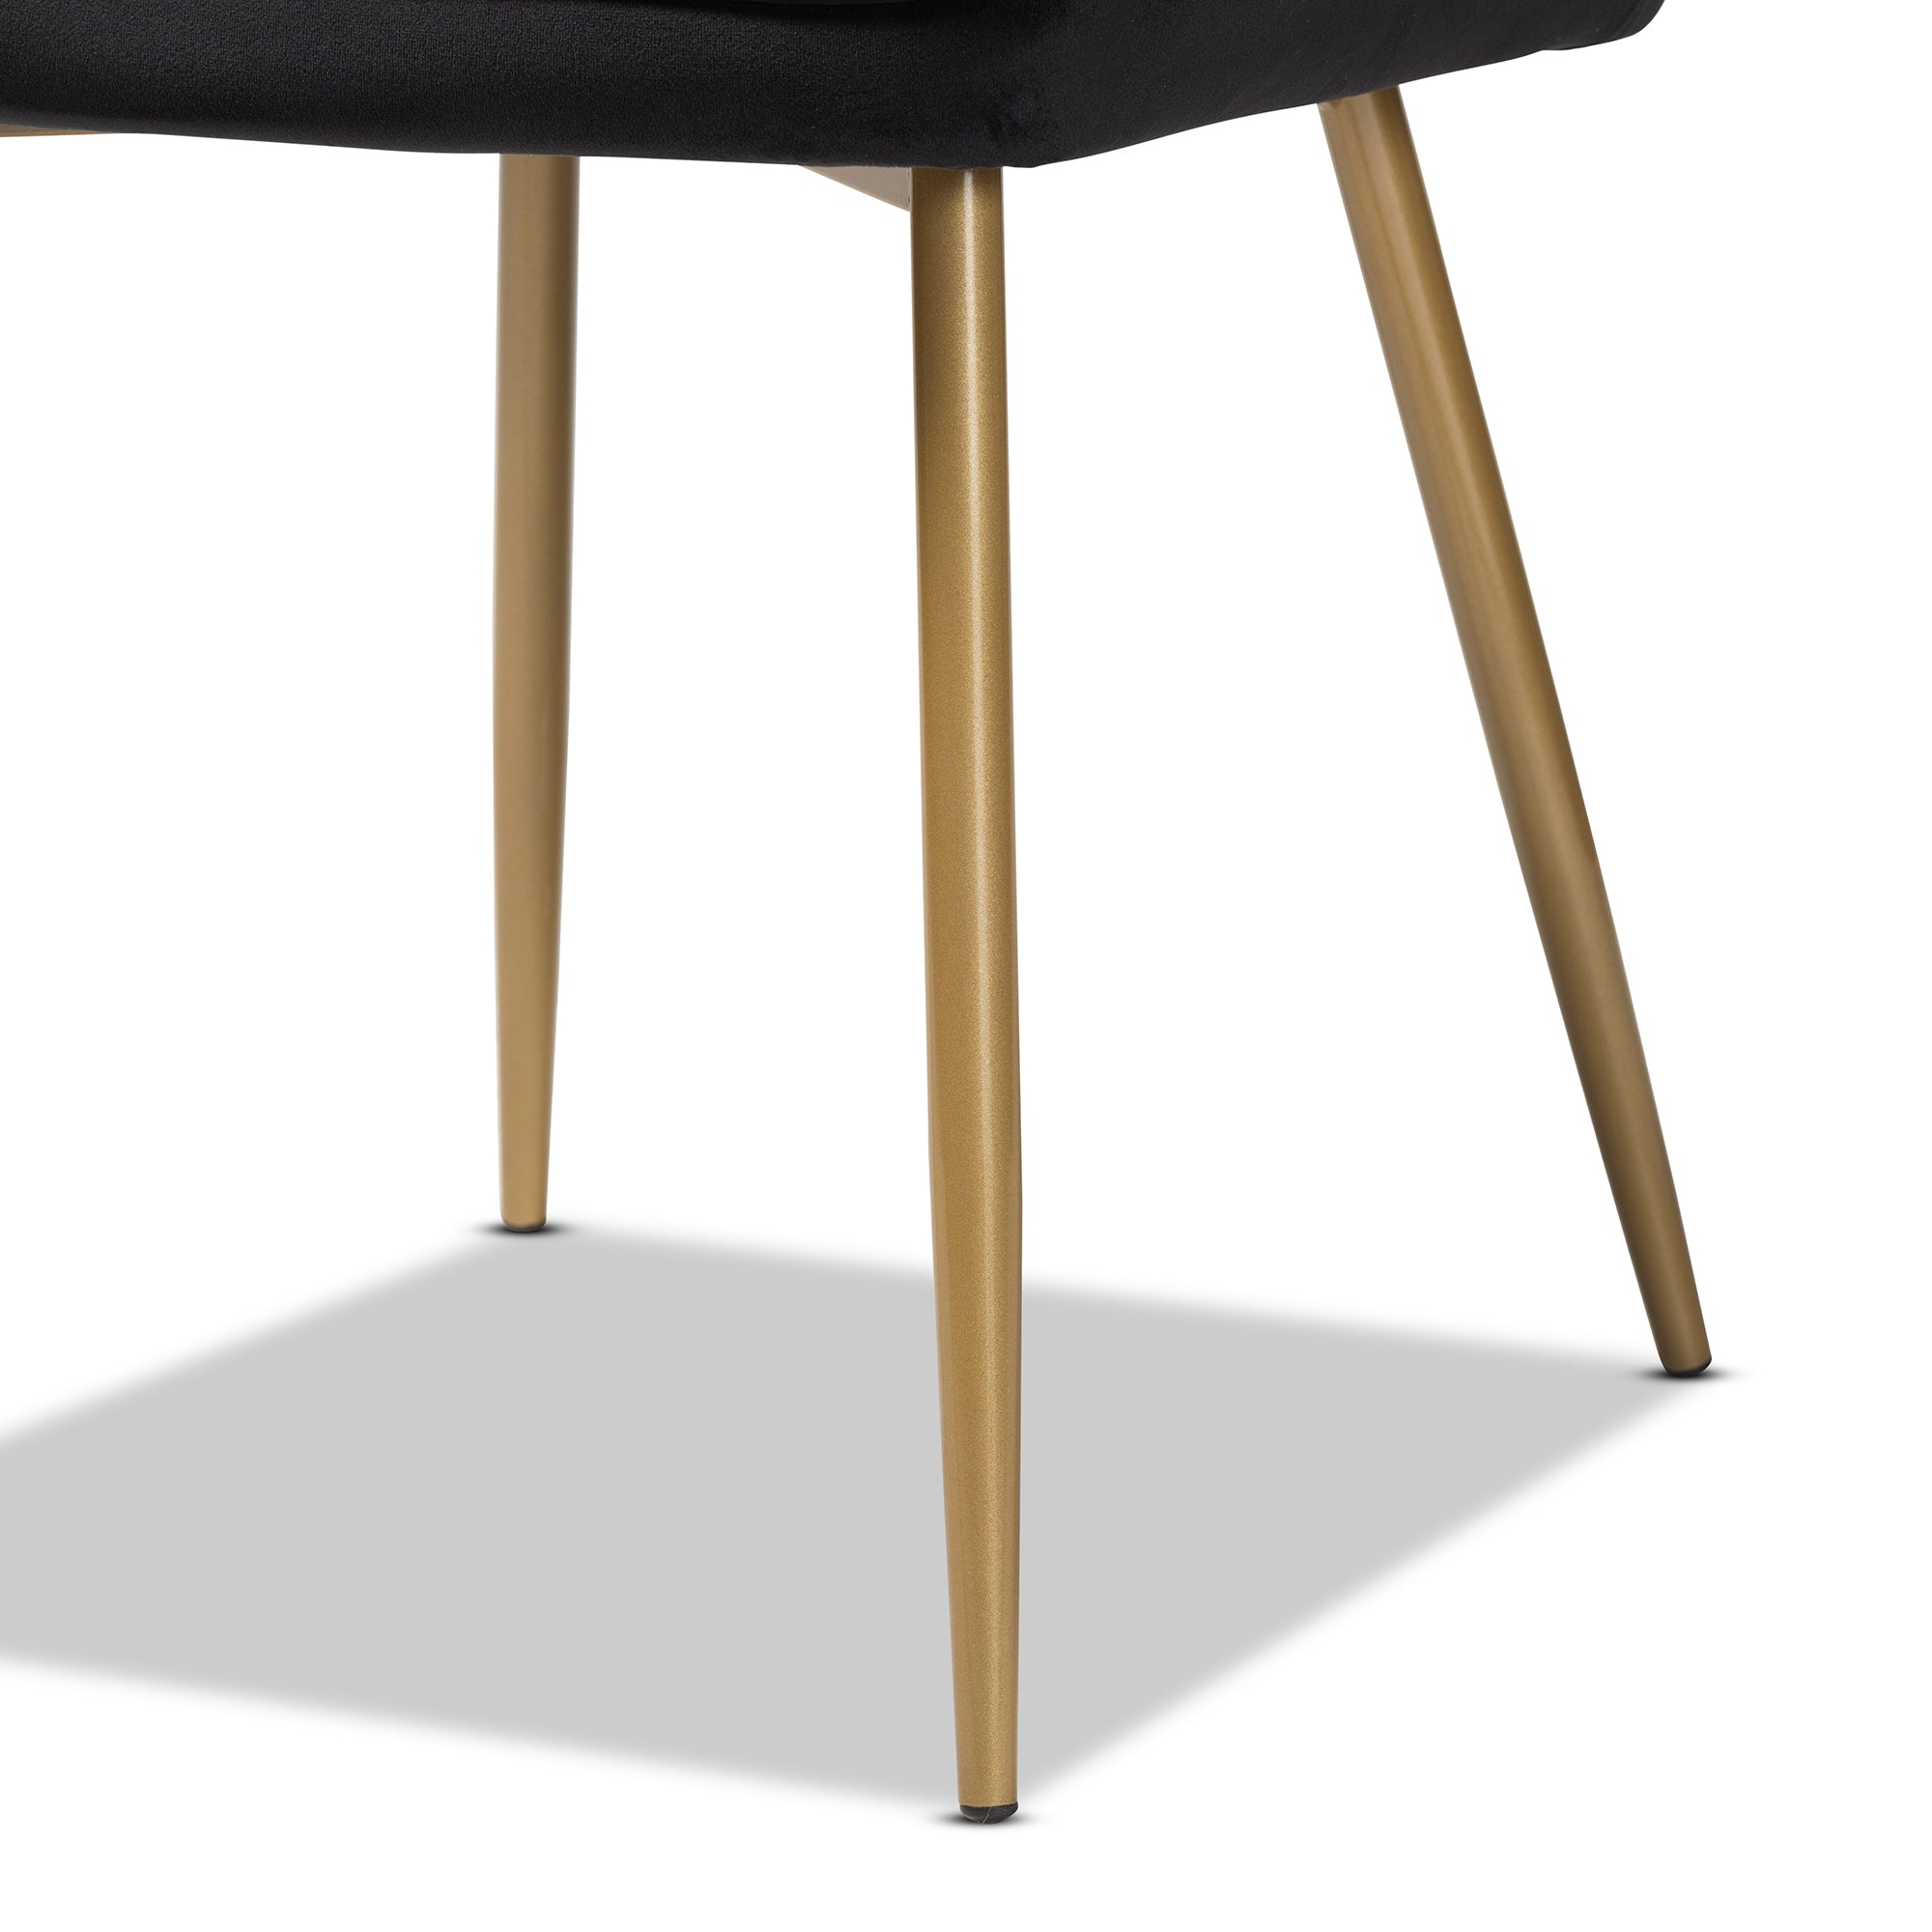 Gavino Glamour Dining Chairs 2-Piece-Dining Chairs-Baxton Studio - WI-Wall2Wall Furnishings